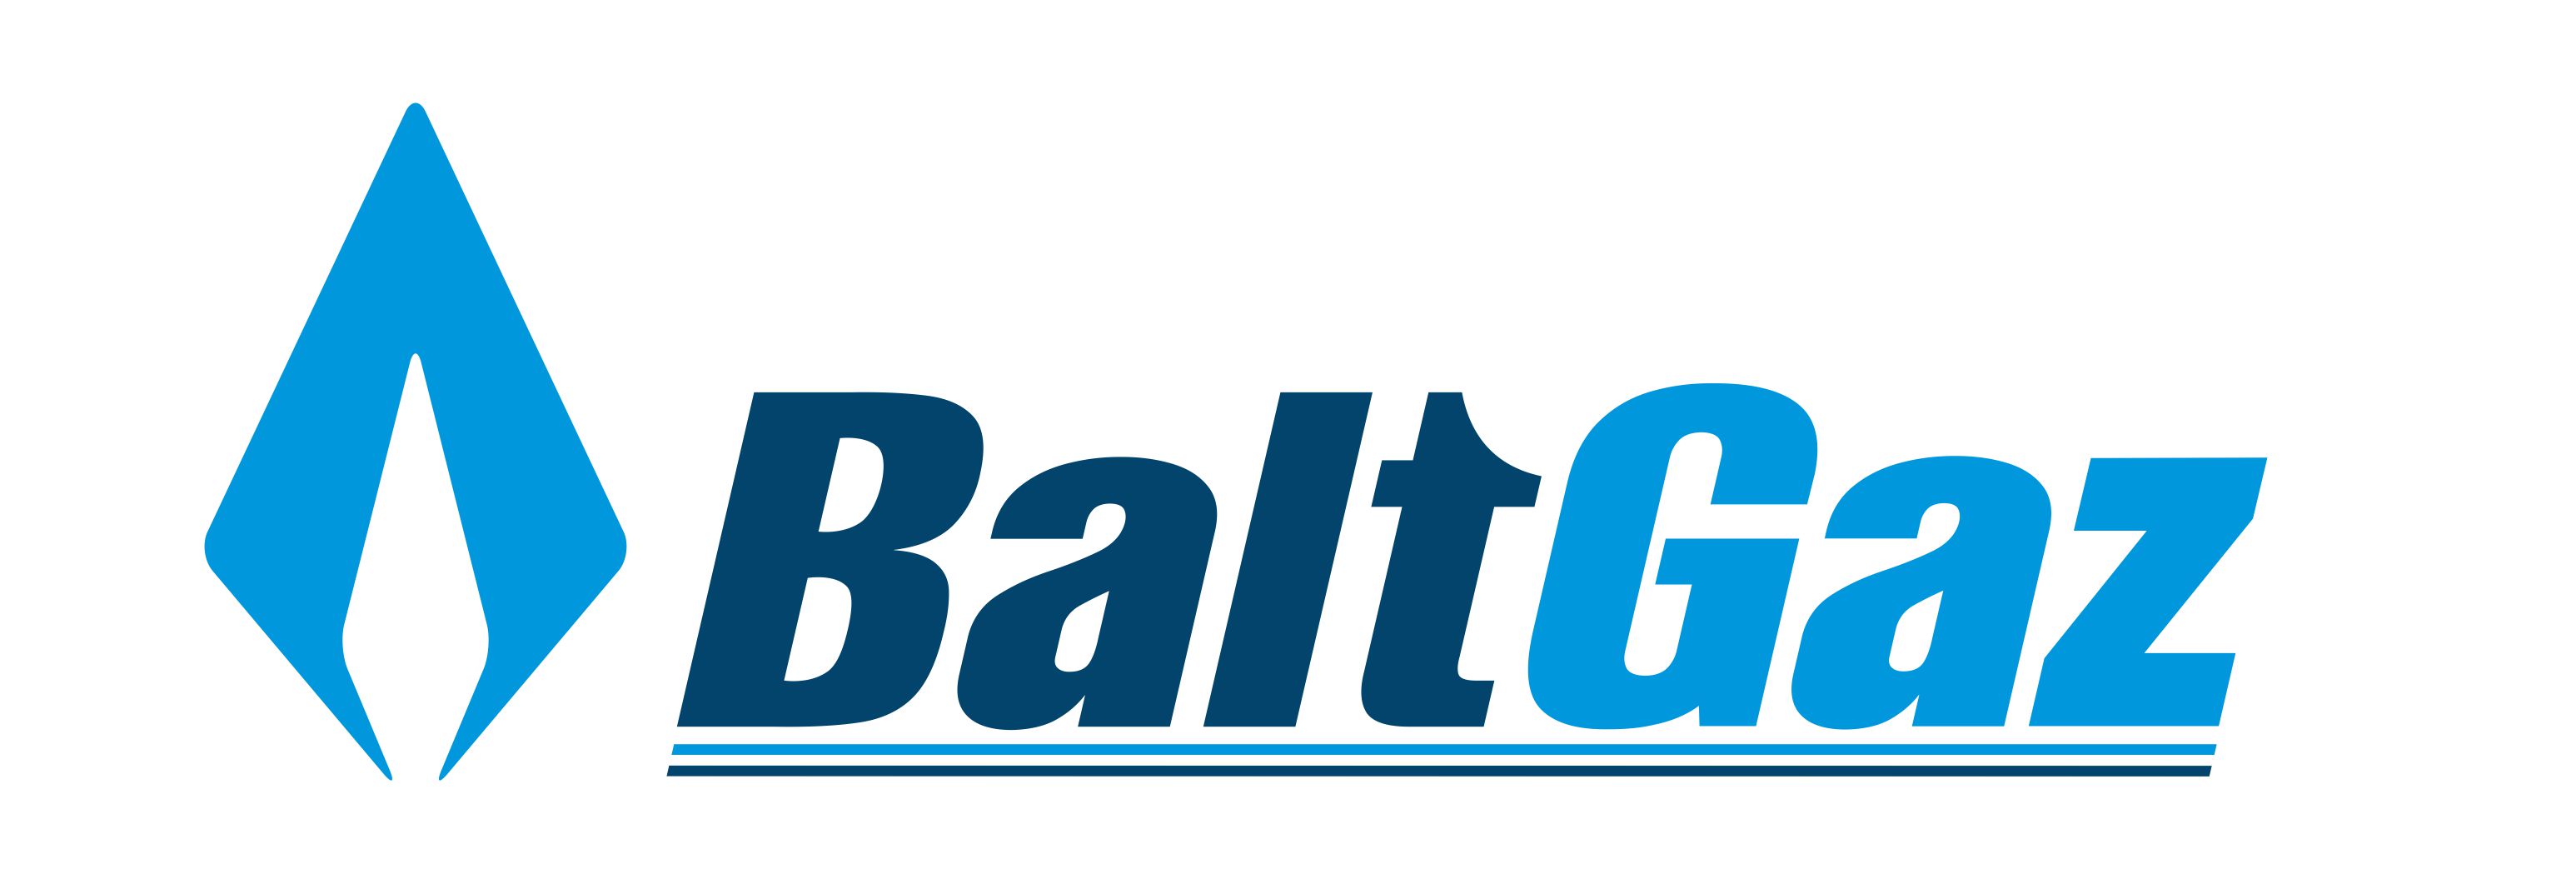 Baltgaz Logo Wallpaper